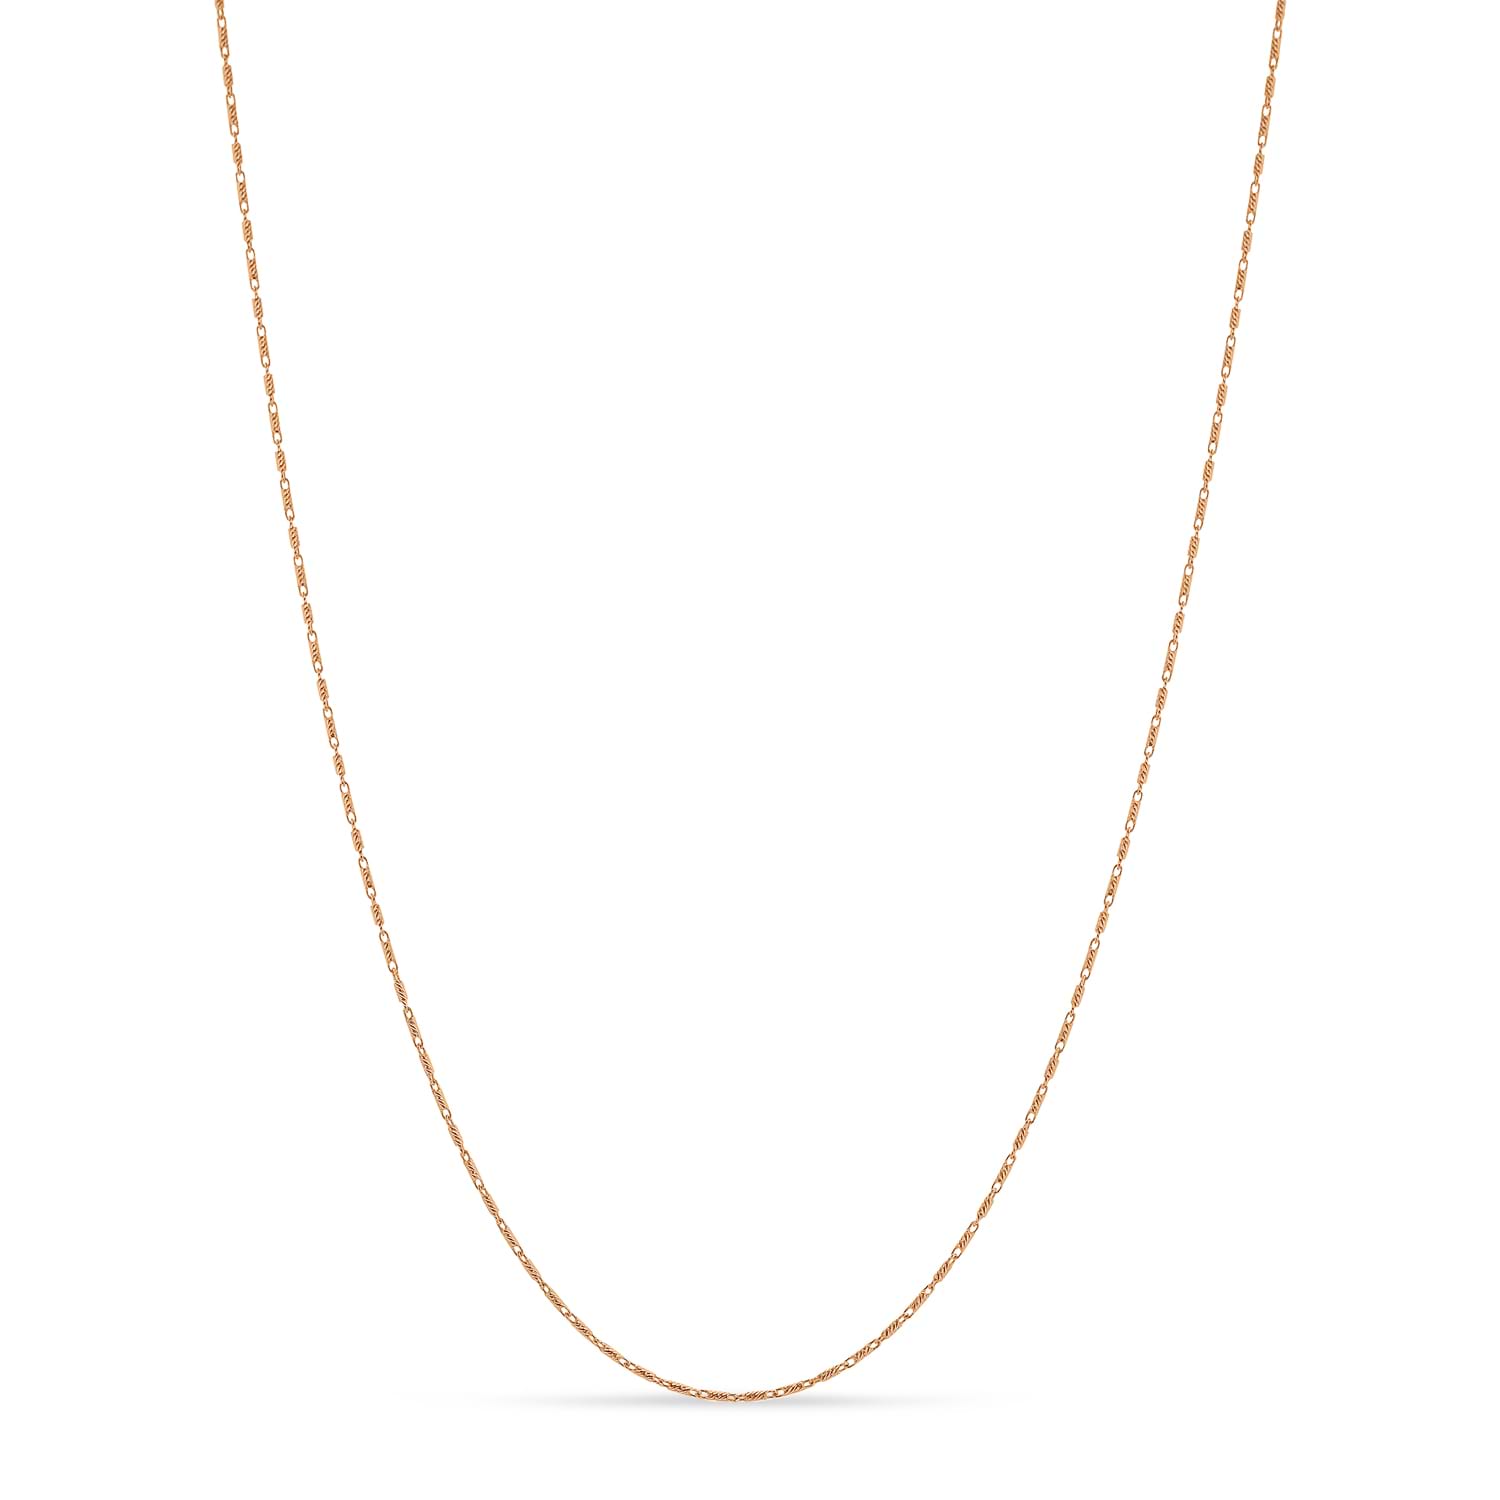 Lumacina Chain Necklace 14k Rose Gold